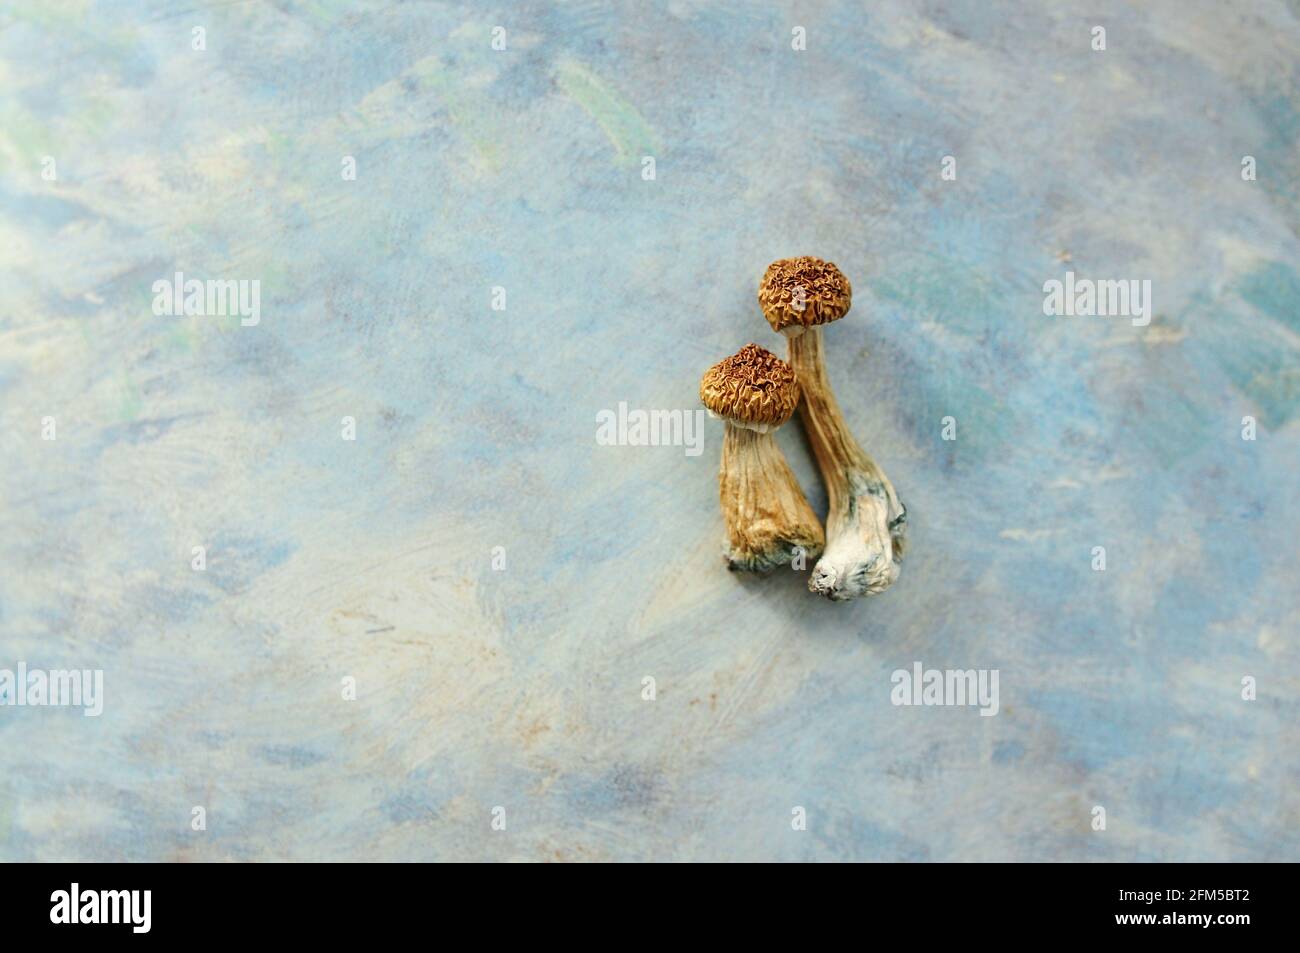 Psilocybe Cubensis mushrooms isolated on grey background. Psilocybin psychedelic magic mushrooms Golden Teacher. Top view, close up. Stock Photo